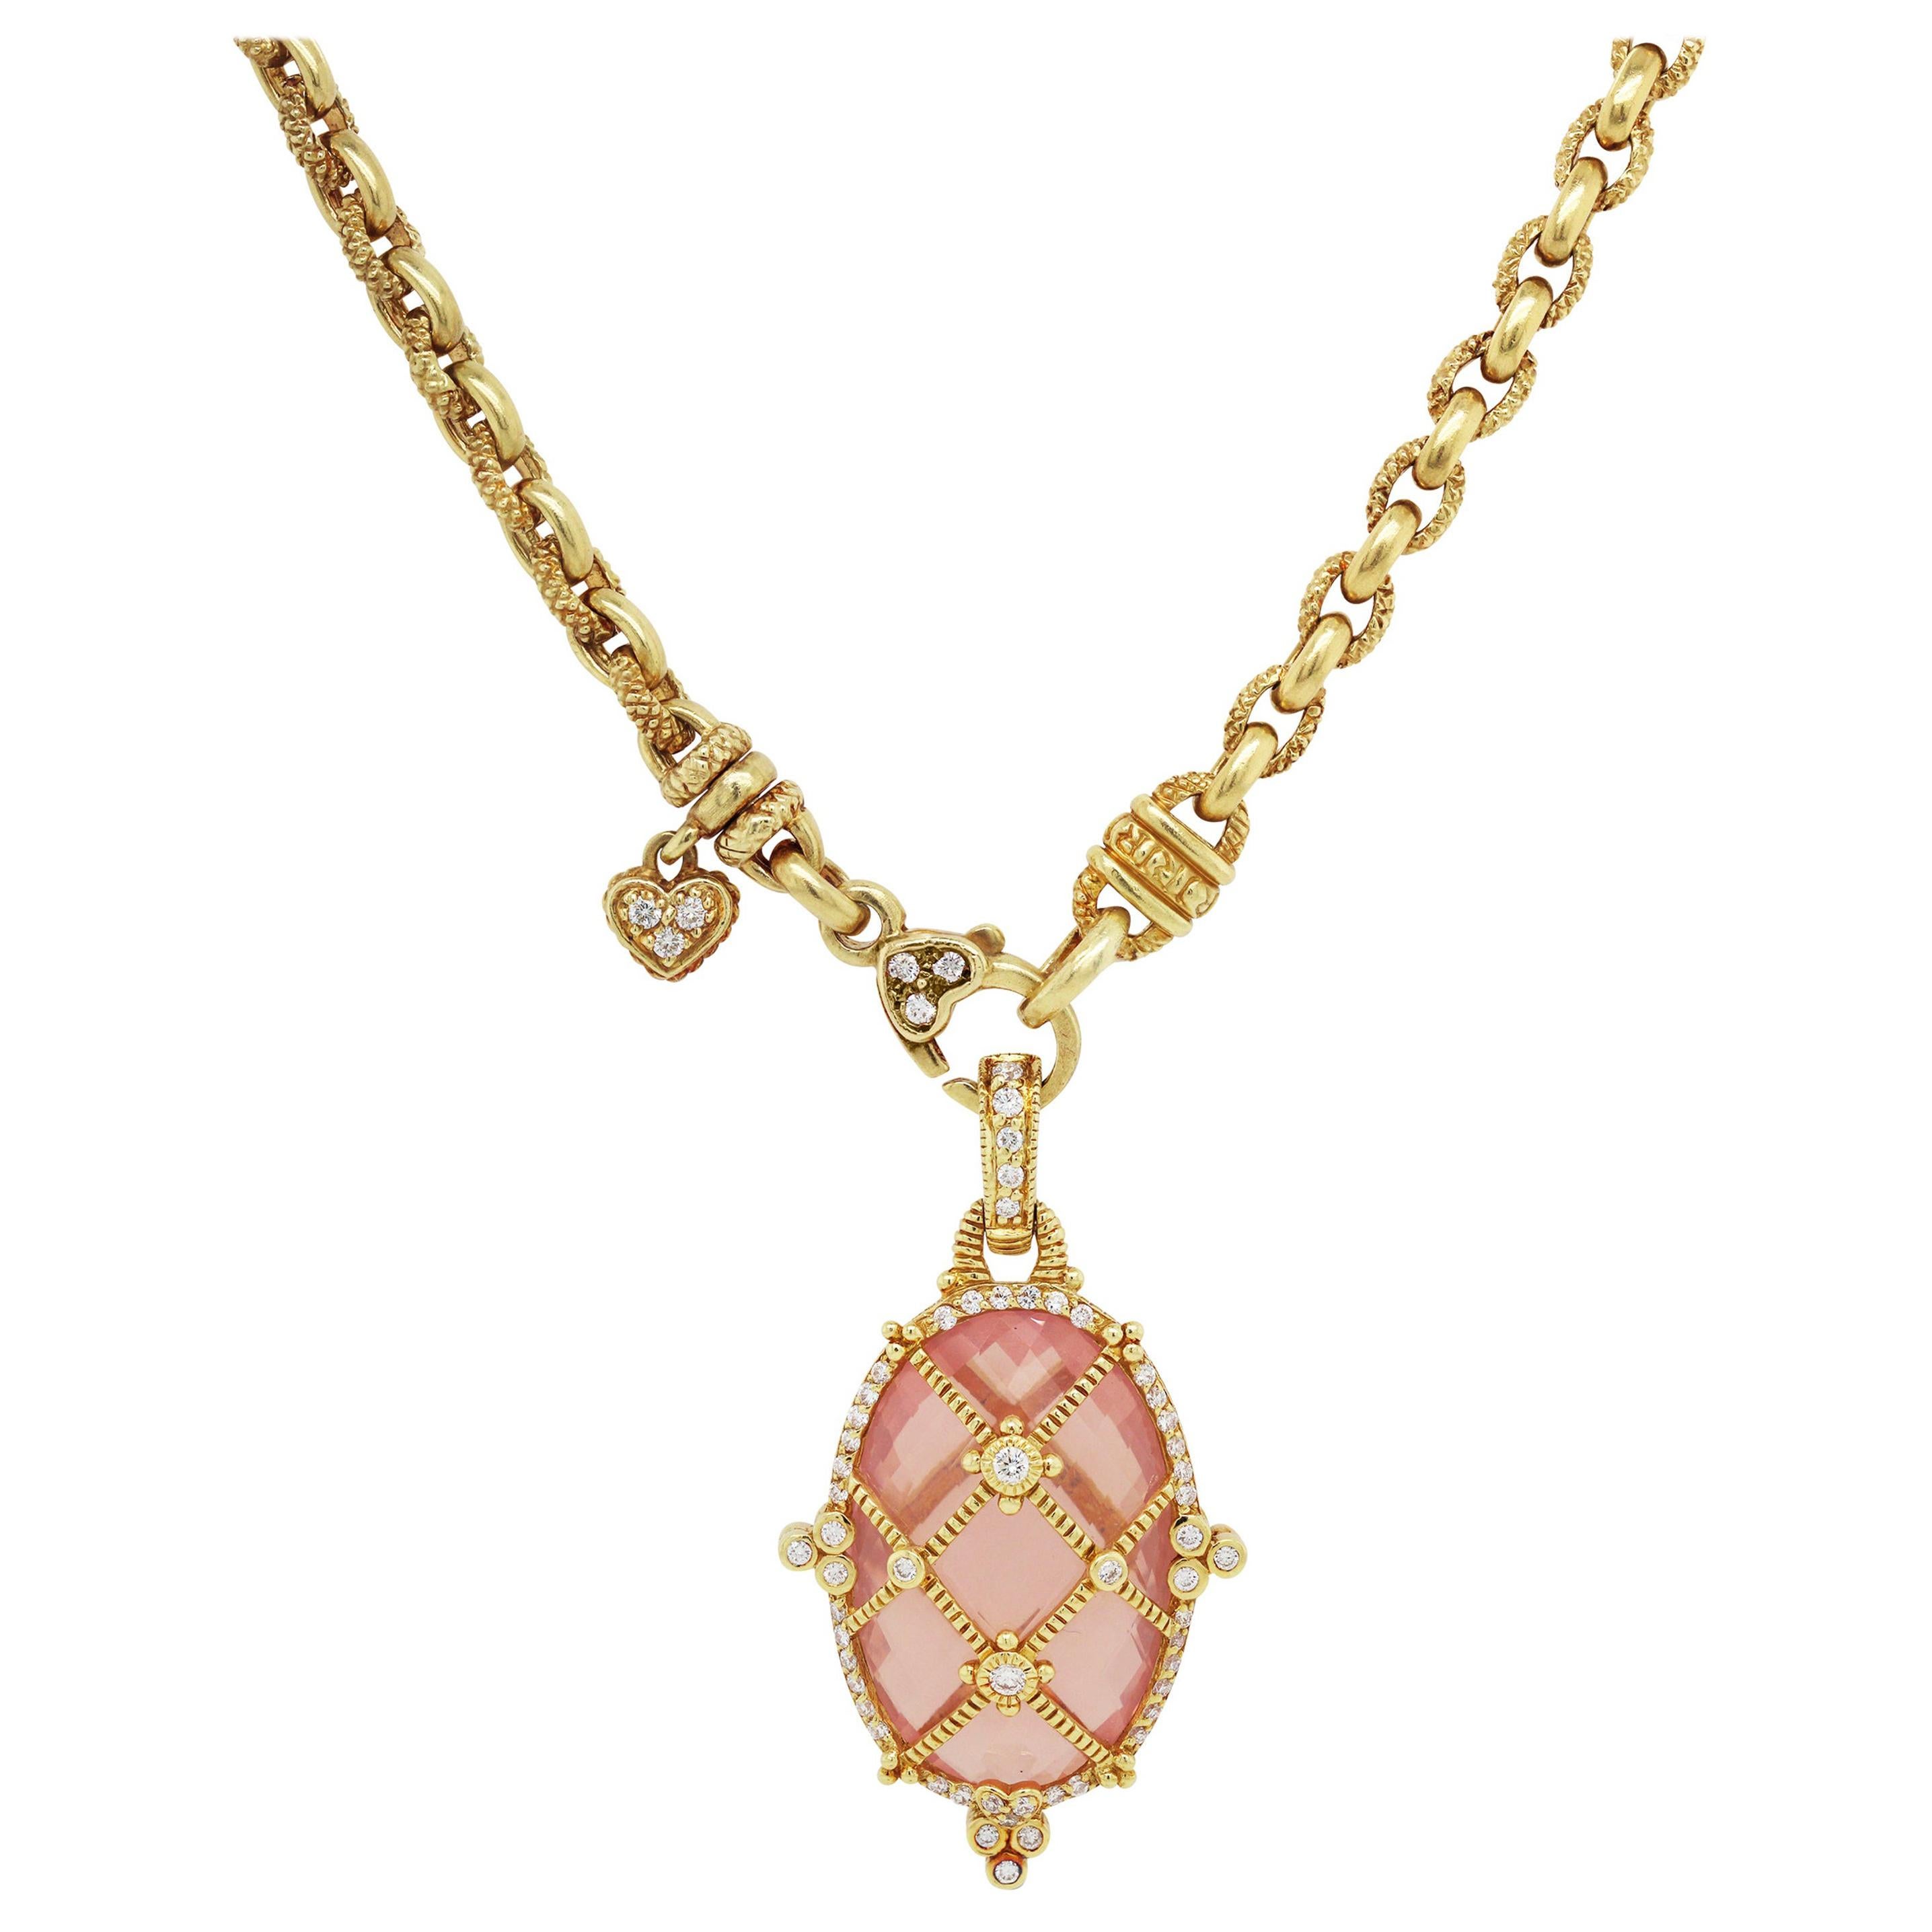 Judith Ripka 18 Karat Gold Diamond Chain Necklace with Pink Crystal Pendant